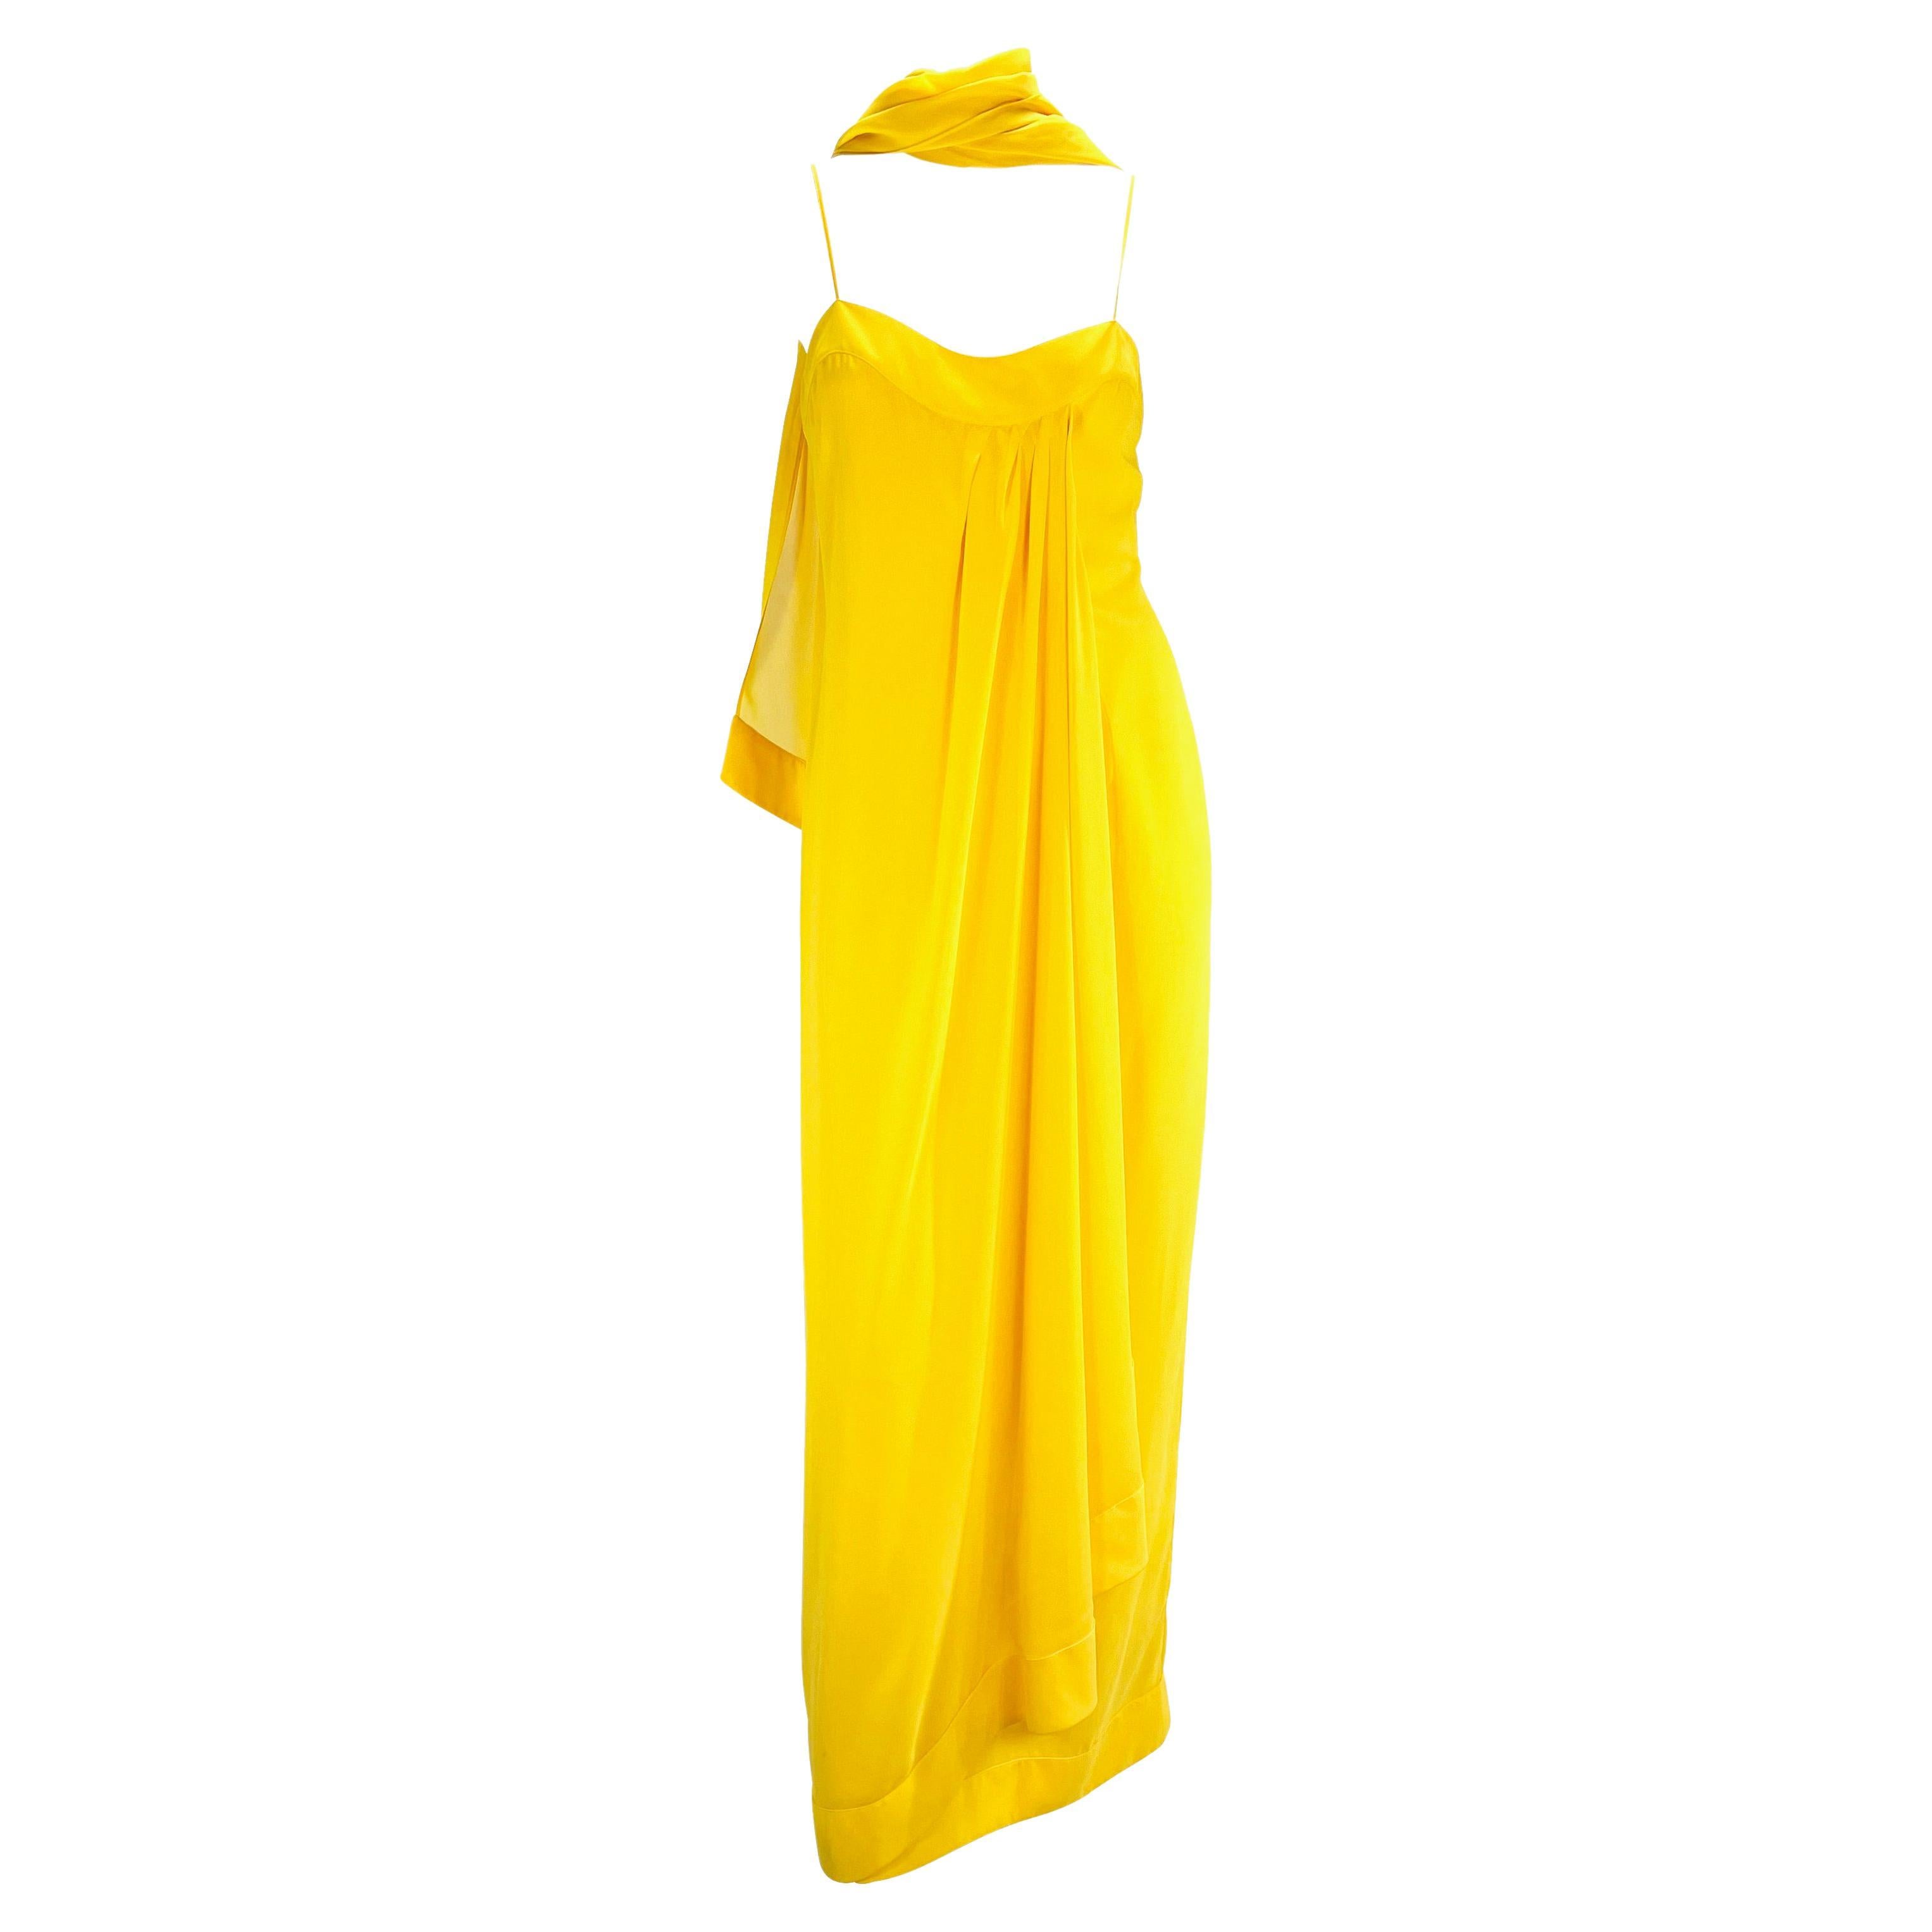 S/S 2000 Thierry Mugler Canary Yellow Chiffon Dress with Matching Shawl For Sale 2